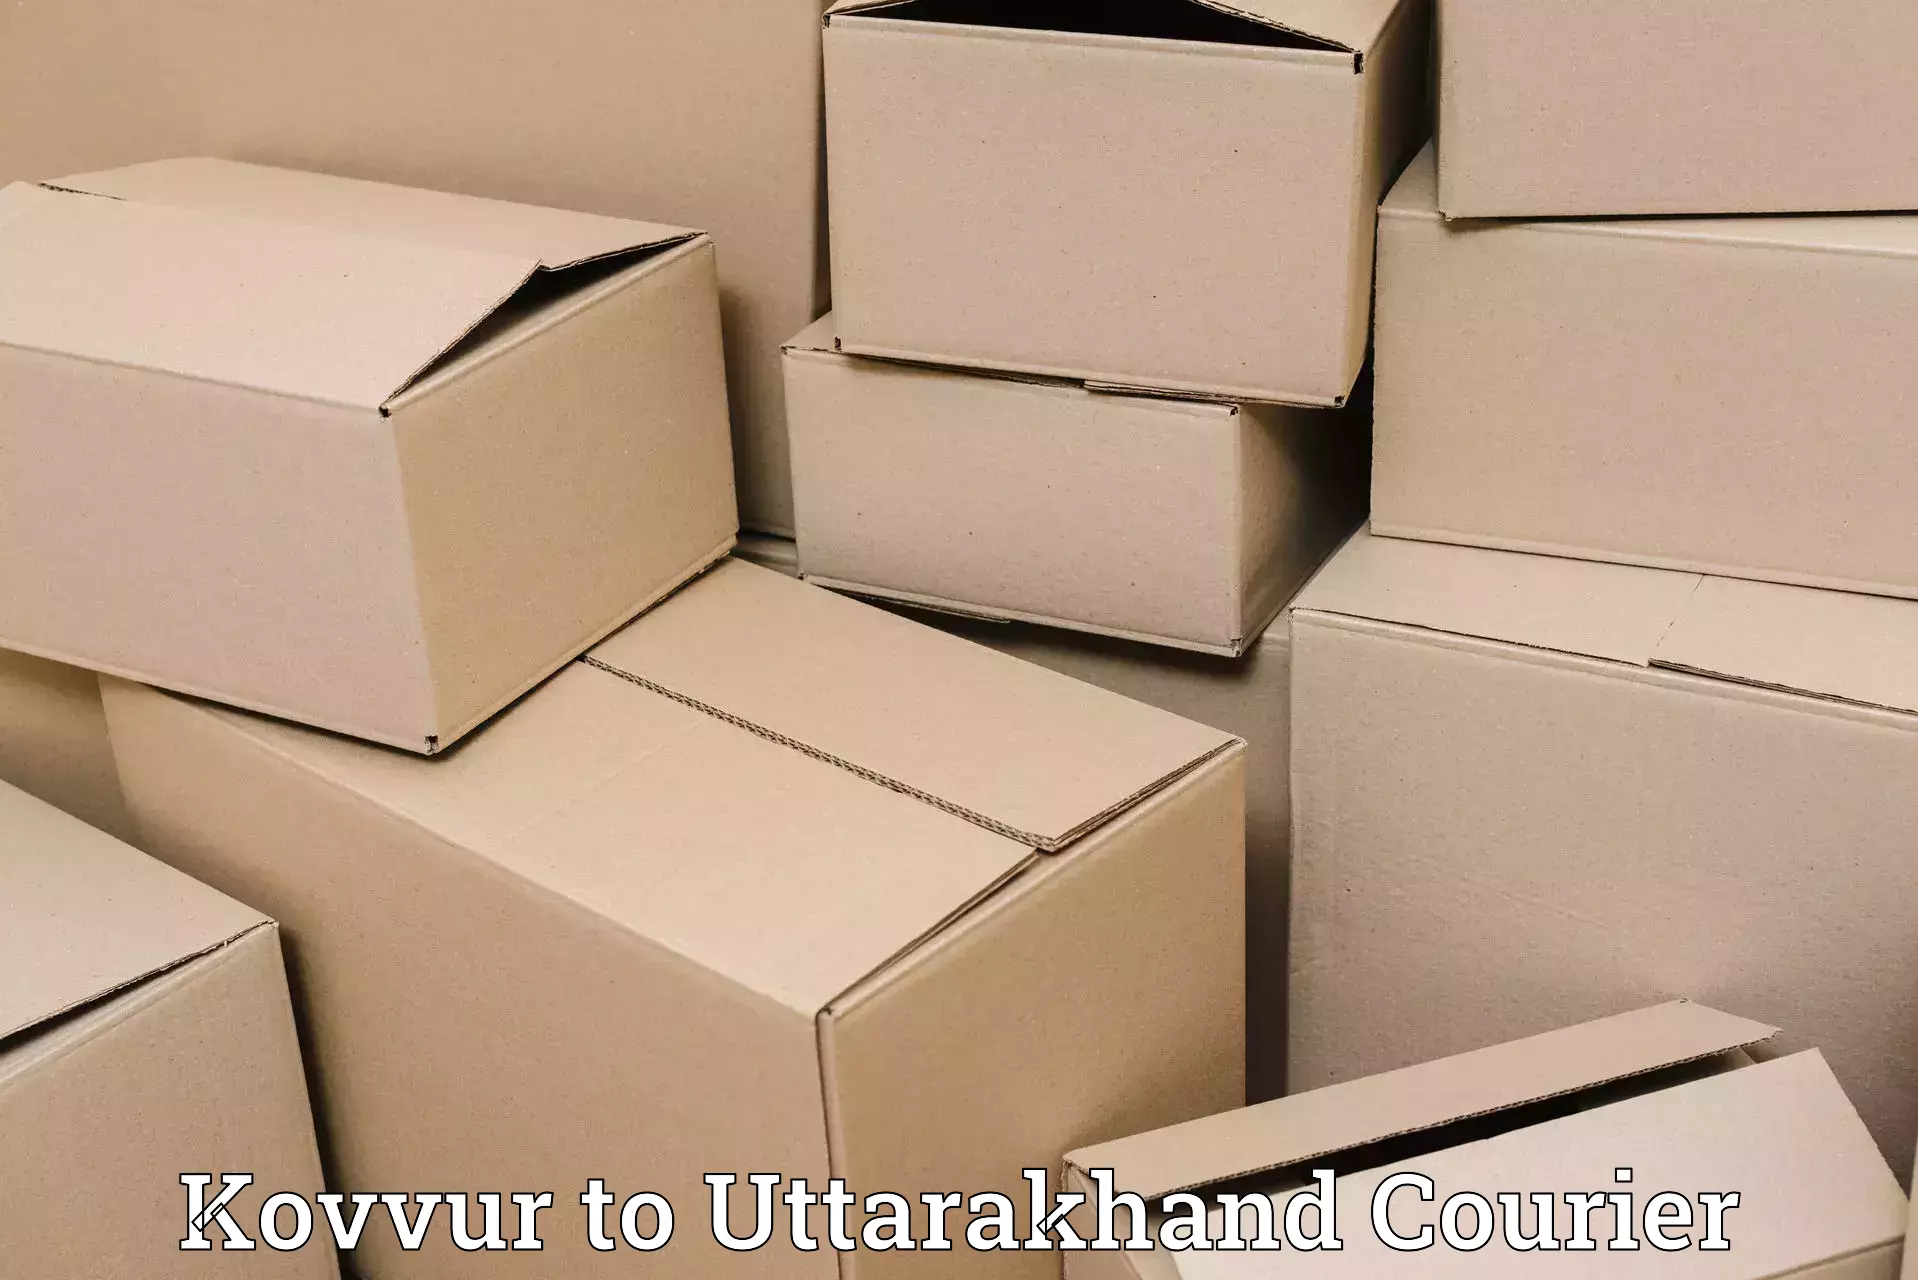 Efficient parcel tracking Kovvur to Tehri